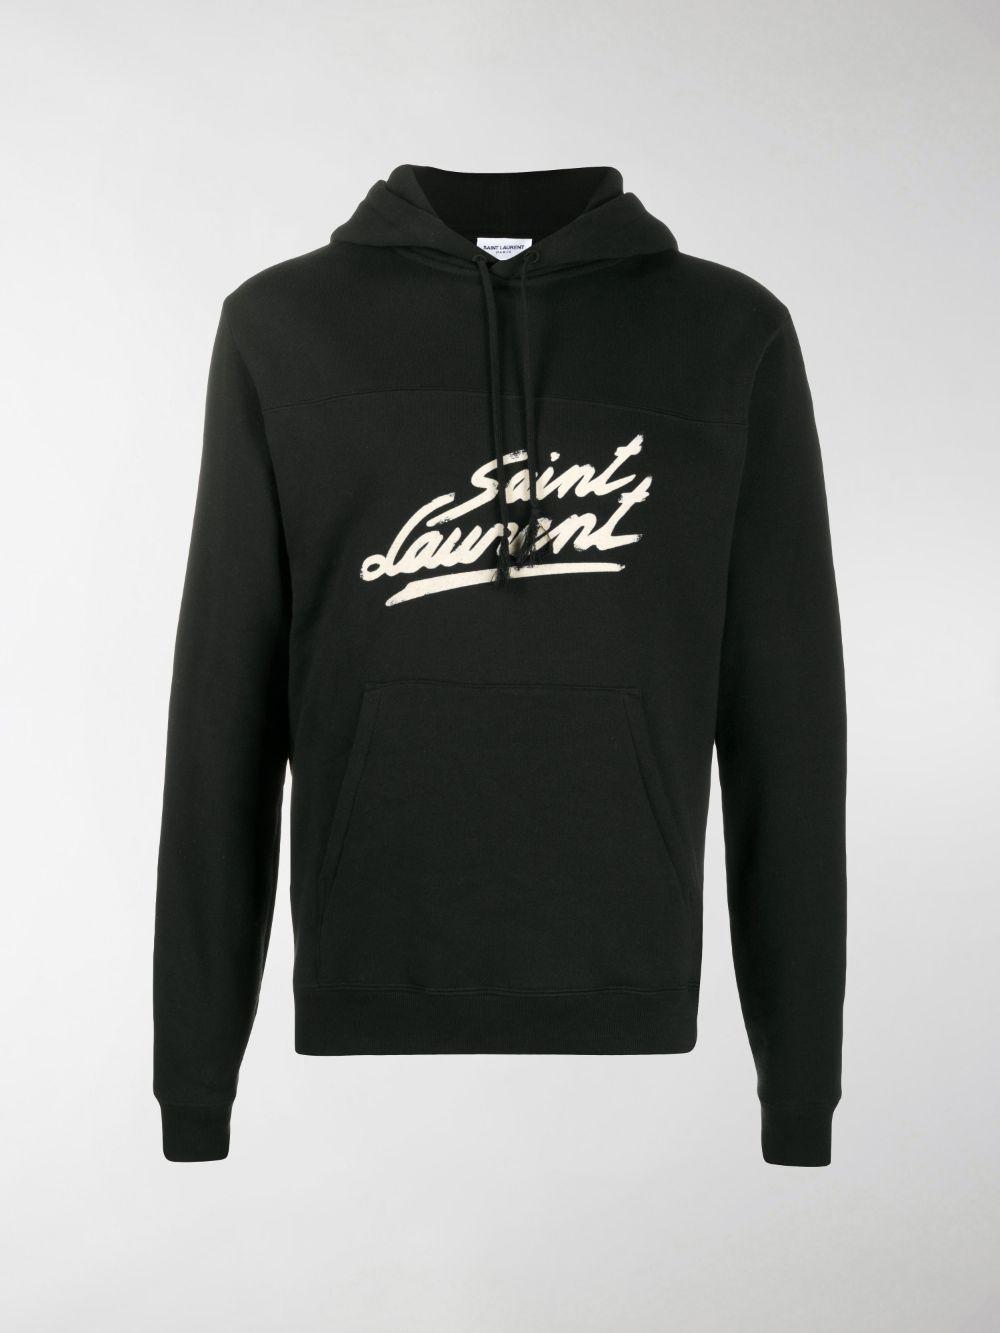 Saint Laurent Cotton Logo Print Hoodie in Black for Men - Lyst